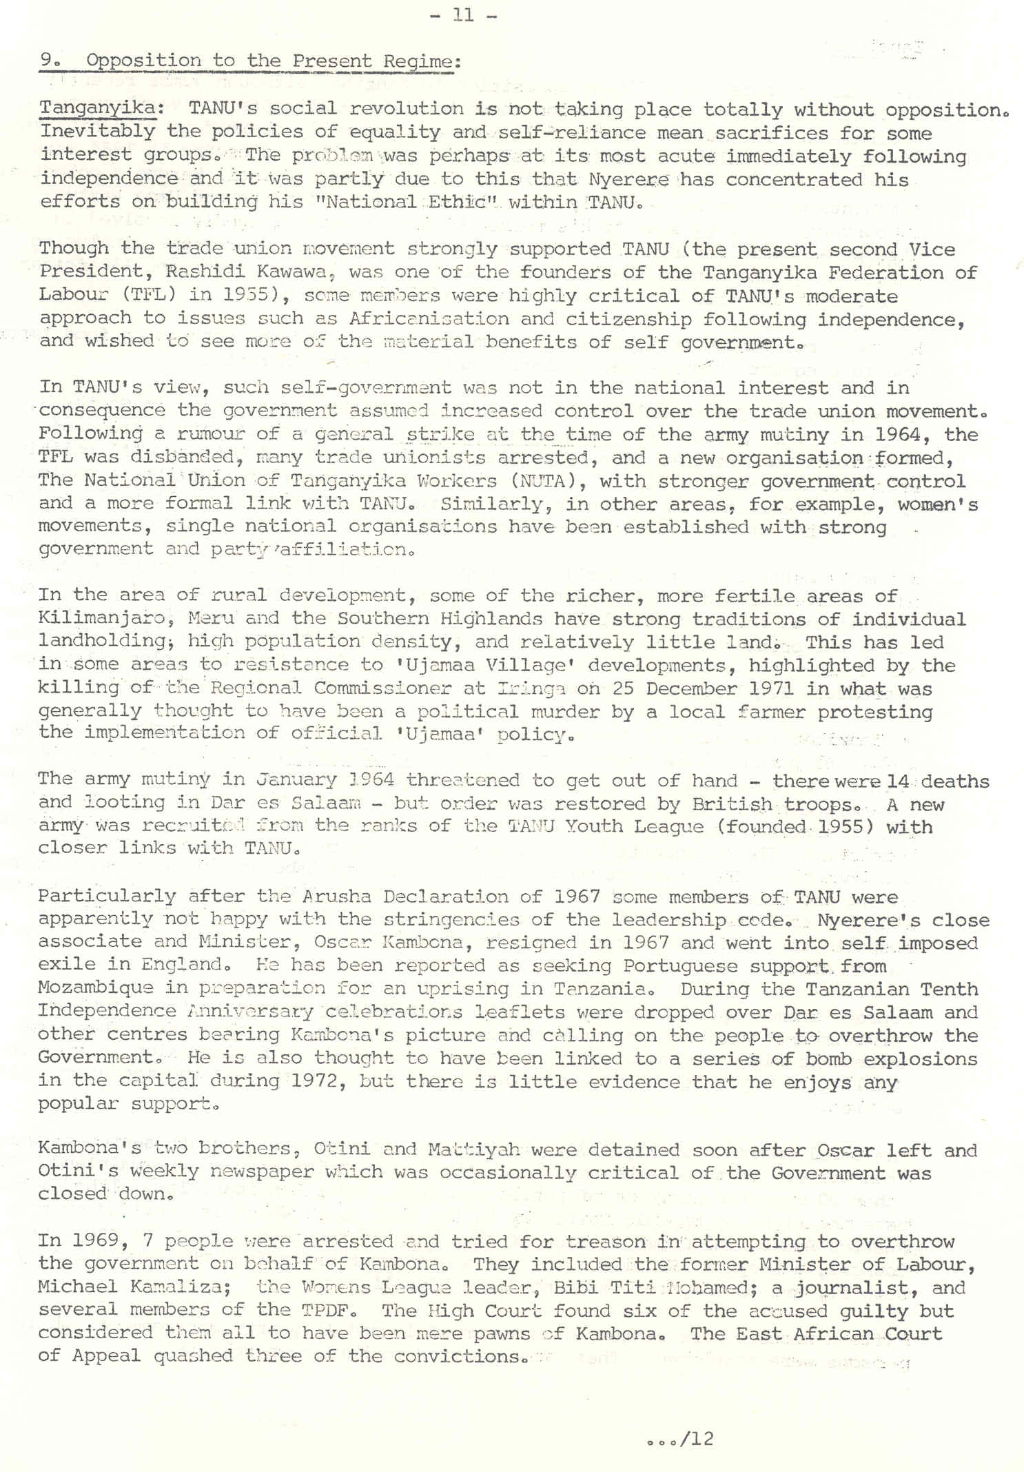 Amnesty International 'Background paper on Tanzania', 1974